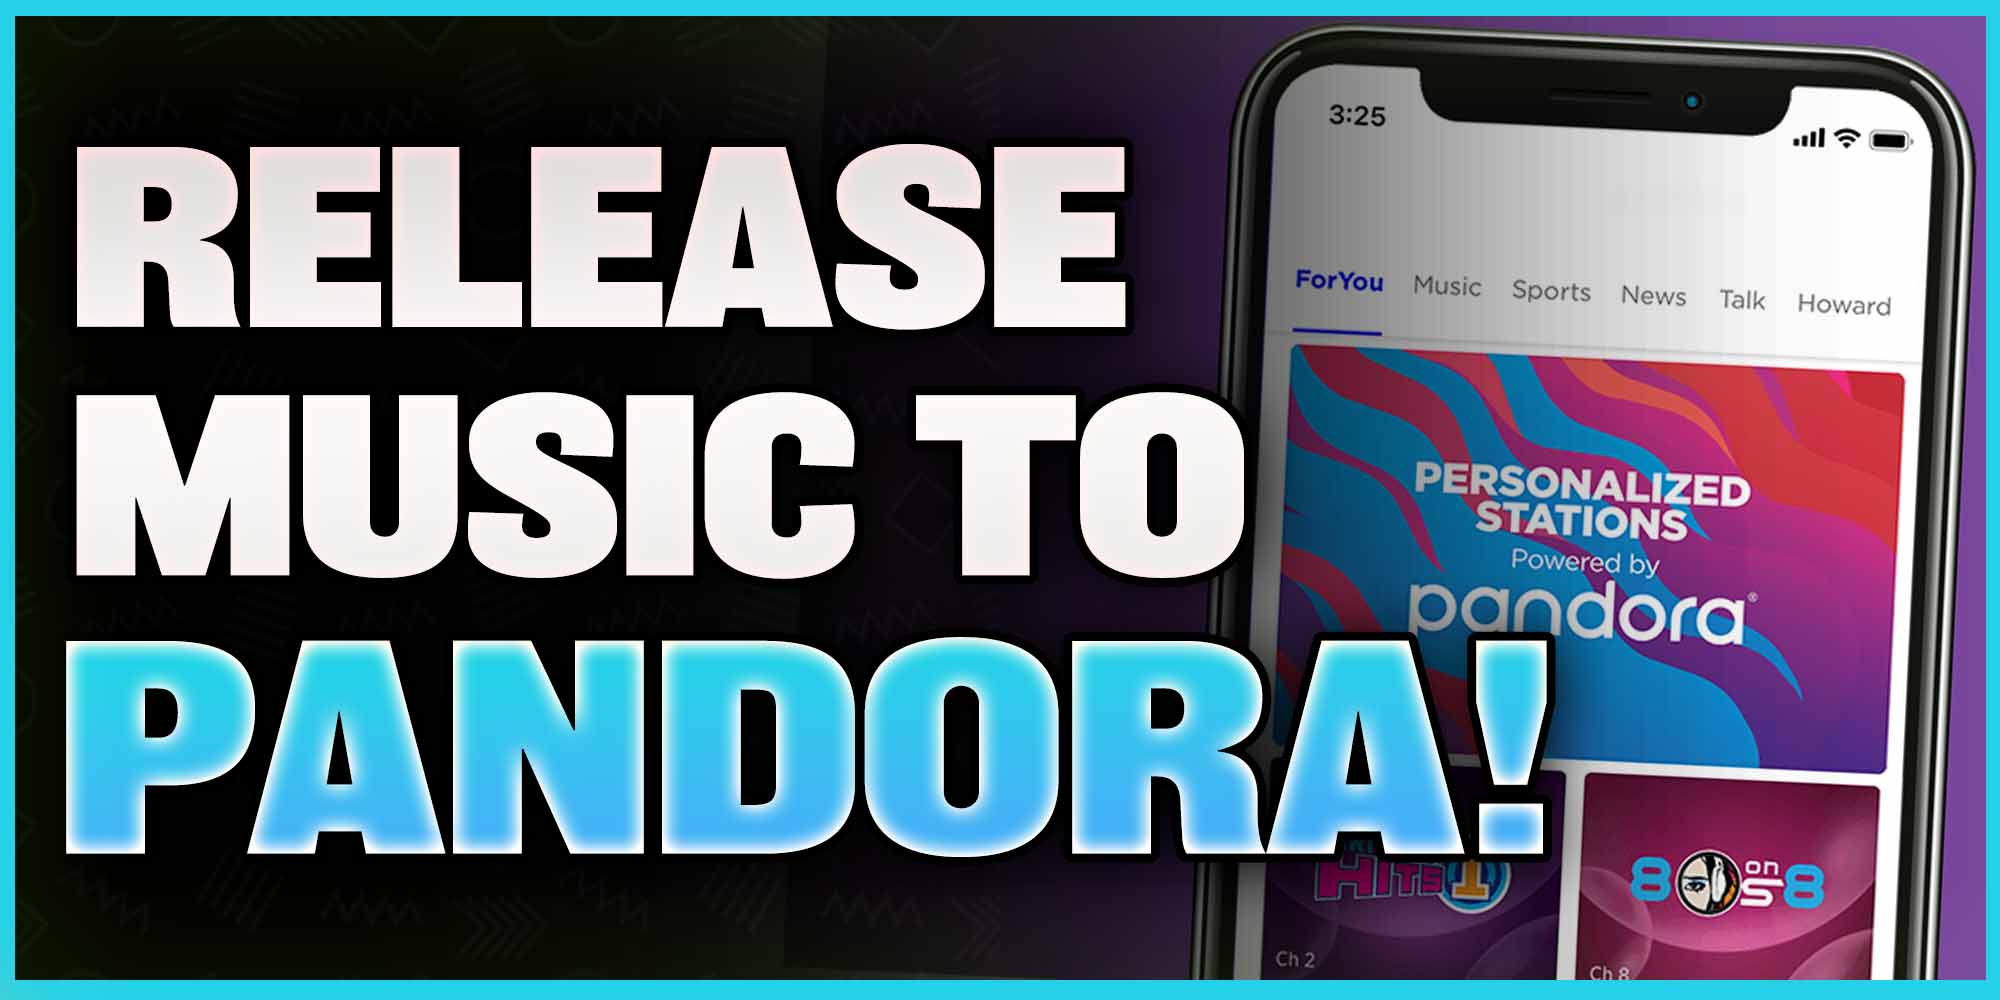 Release Music to Pandora